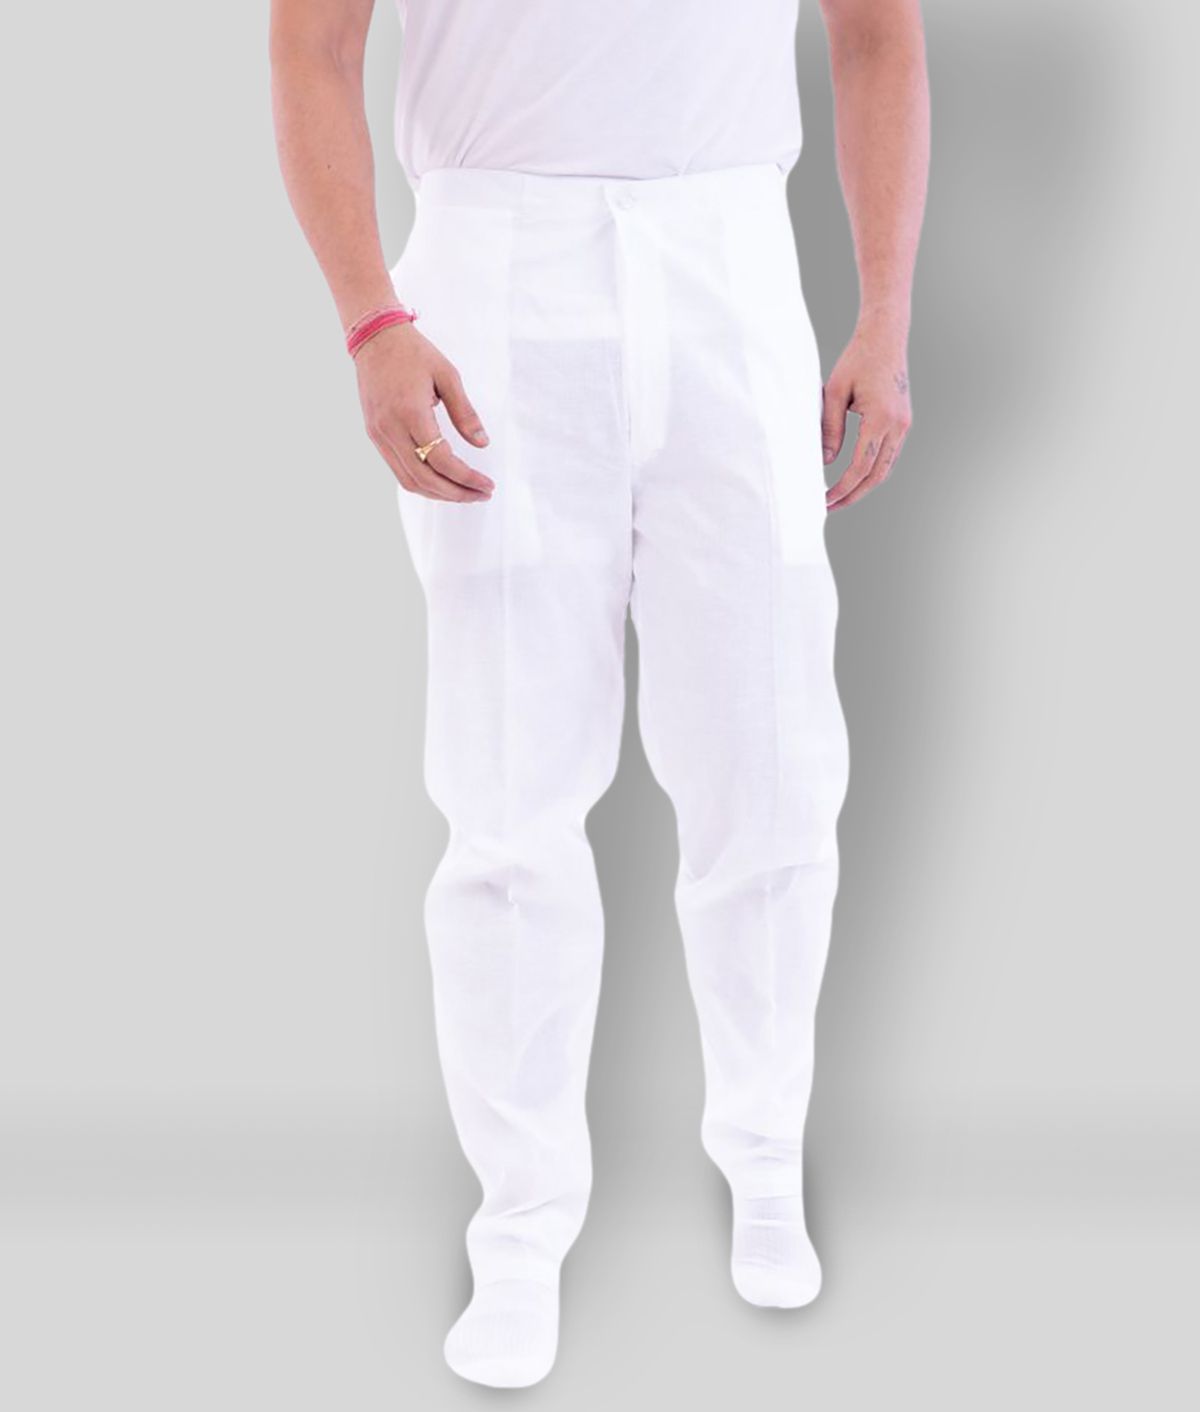     			DESHBANDHU DBK - White Cotton Men's Joggers ( Pack of 1 )